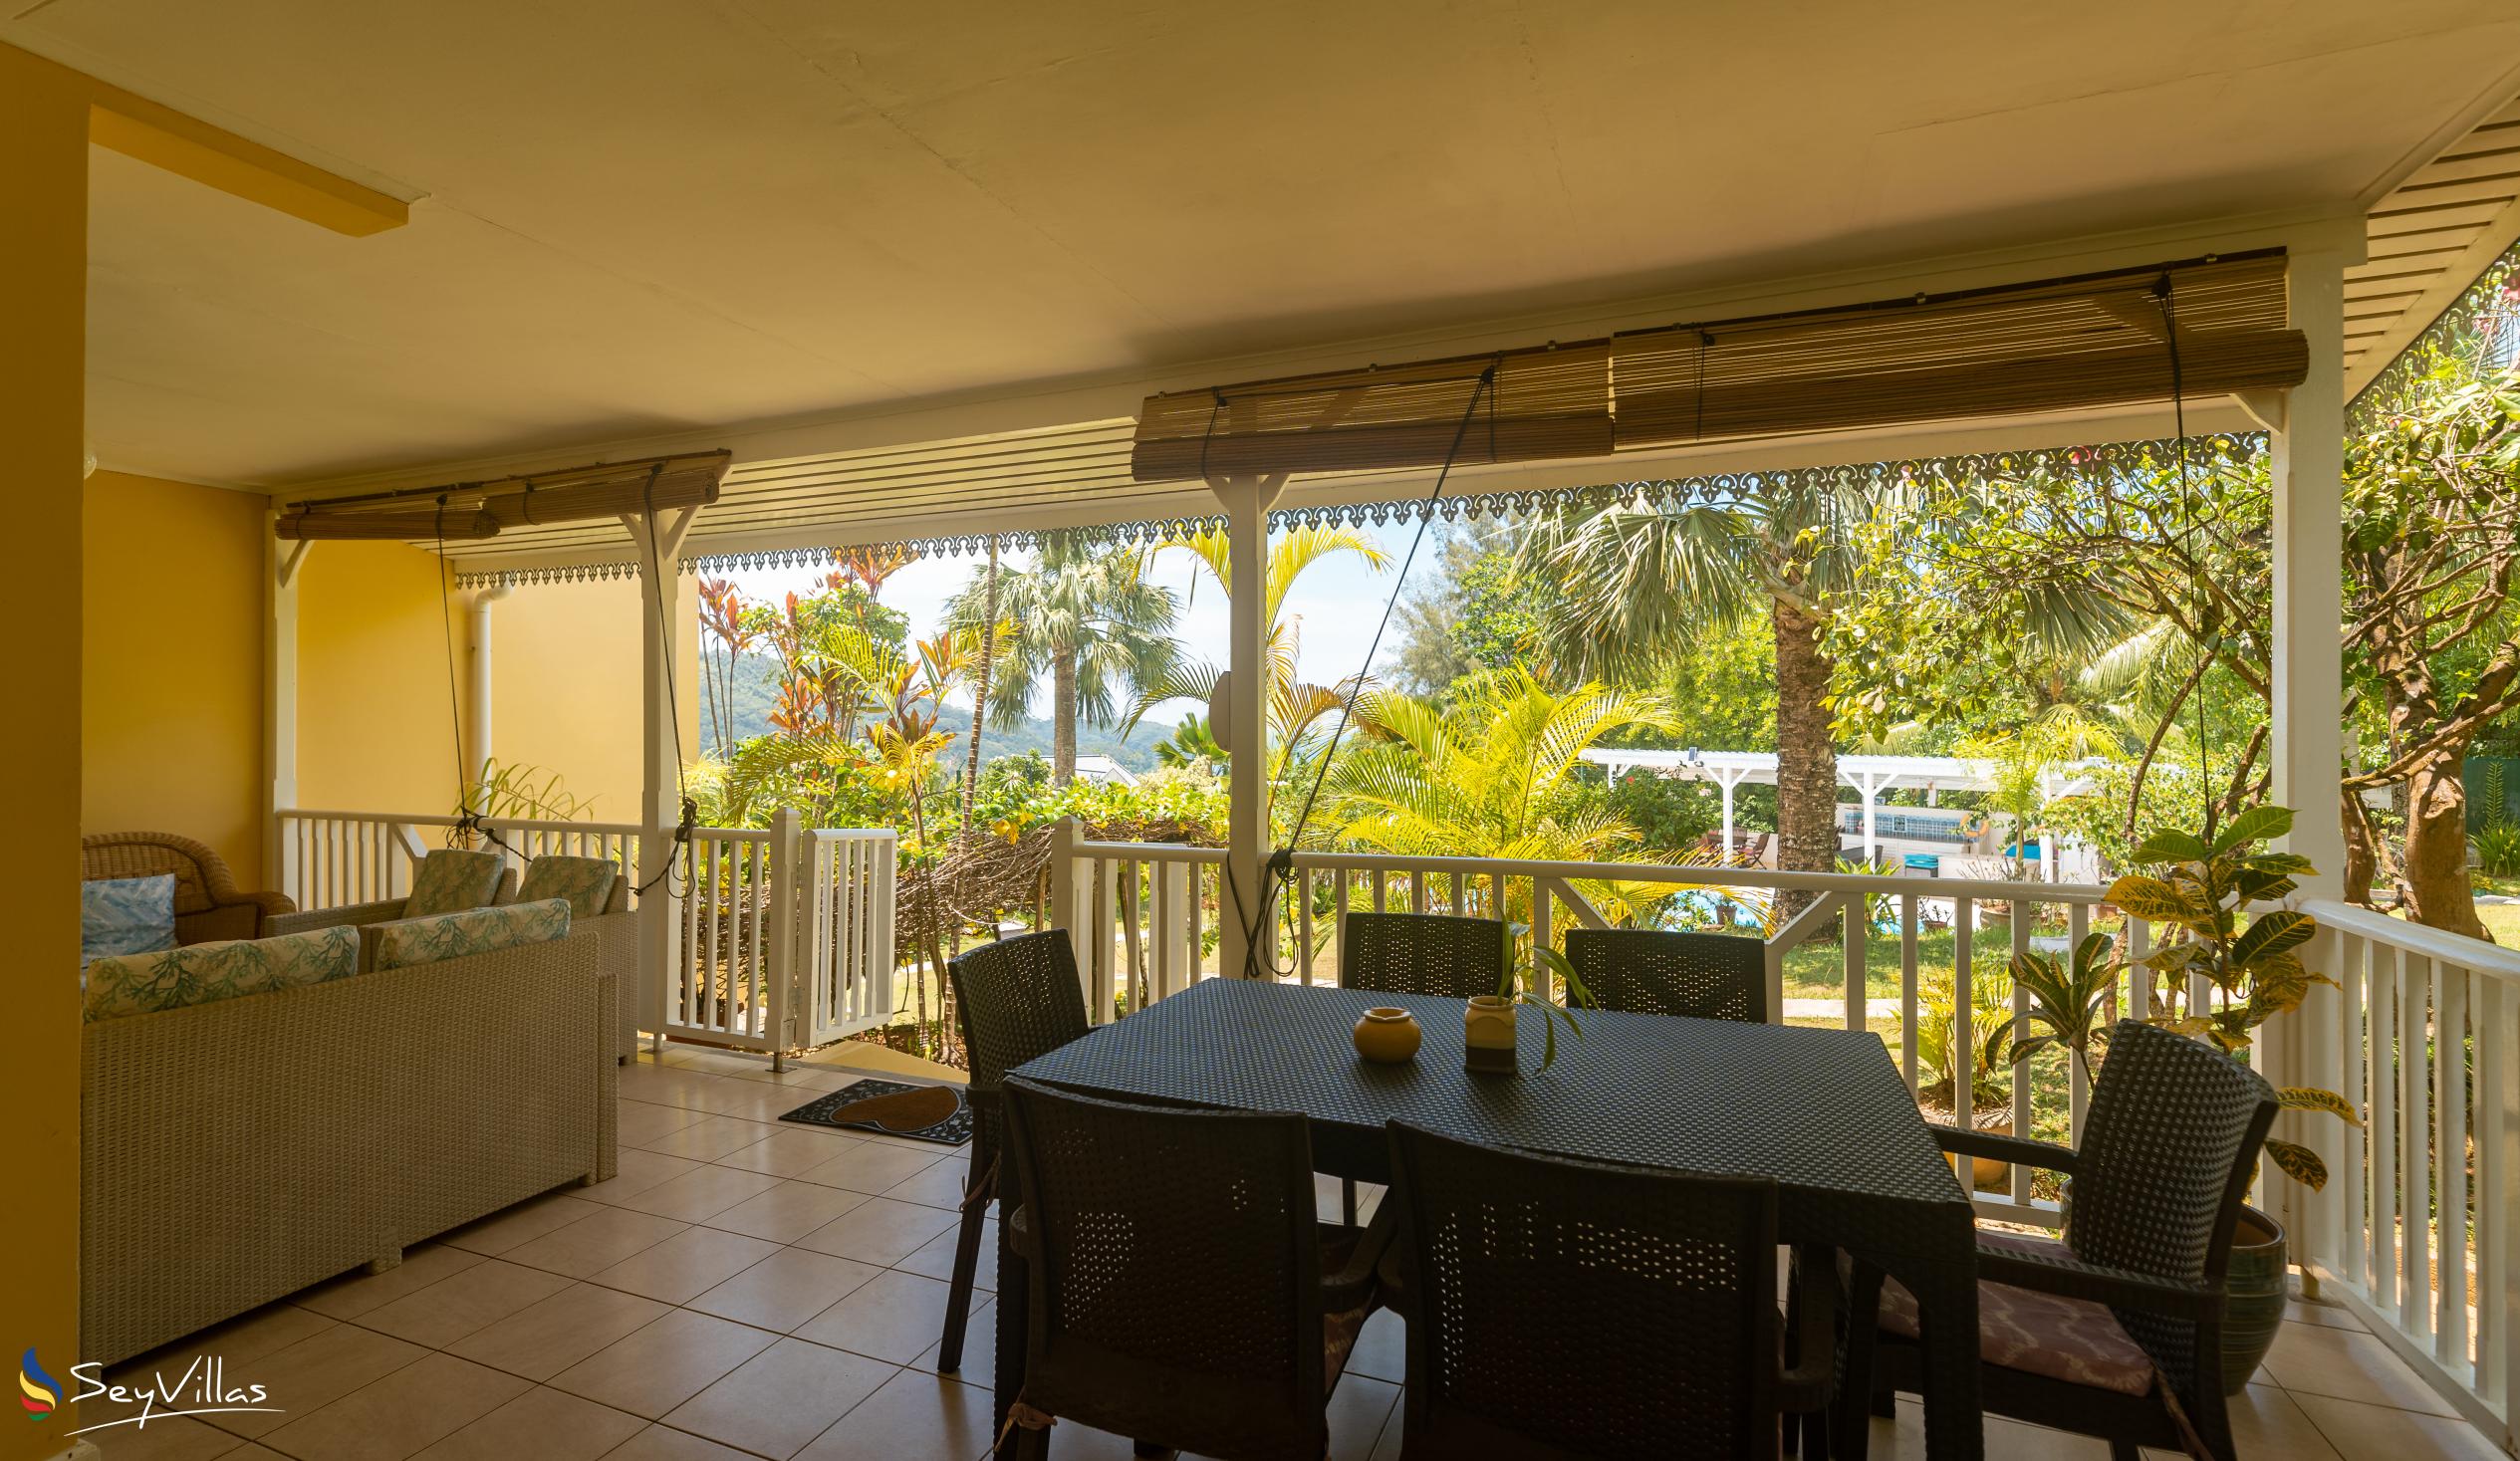 Photo 79: Residence Monte Cristo - 3-Bedroom Duplex - Mahé (Seychelles)